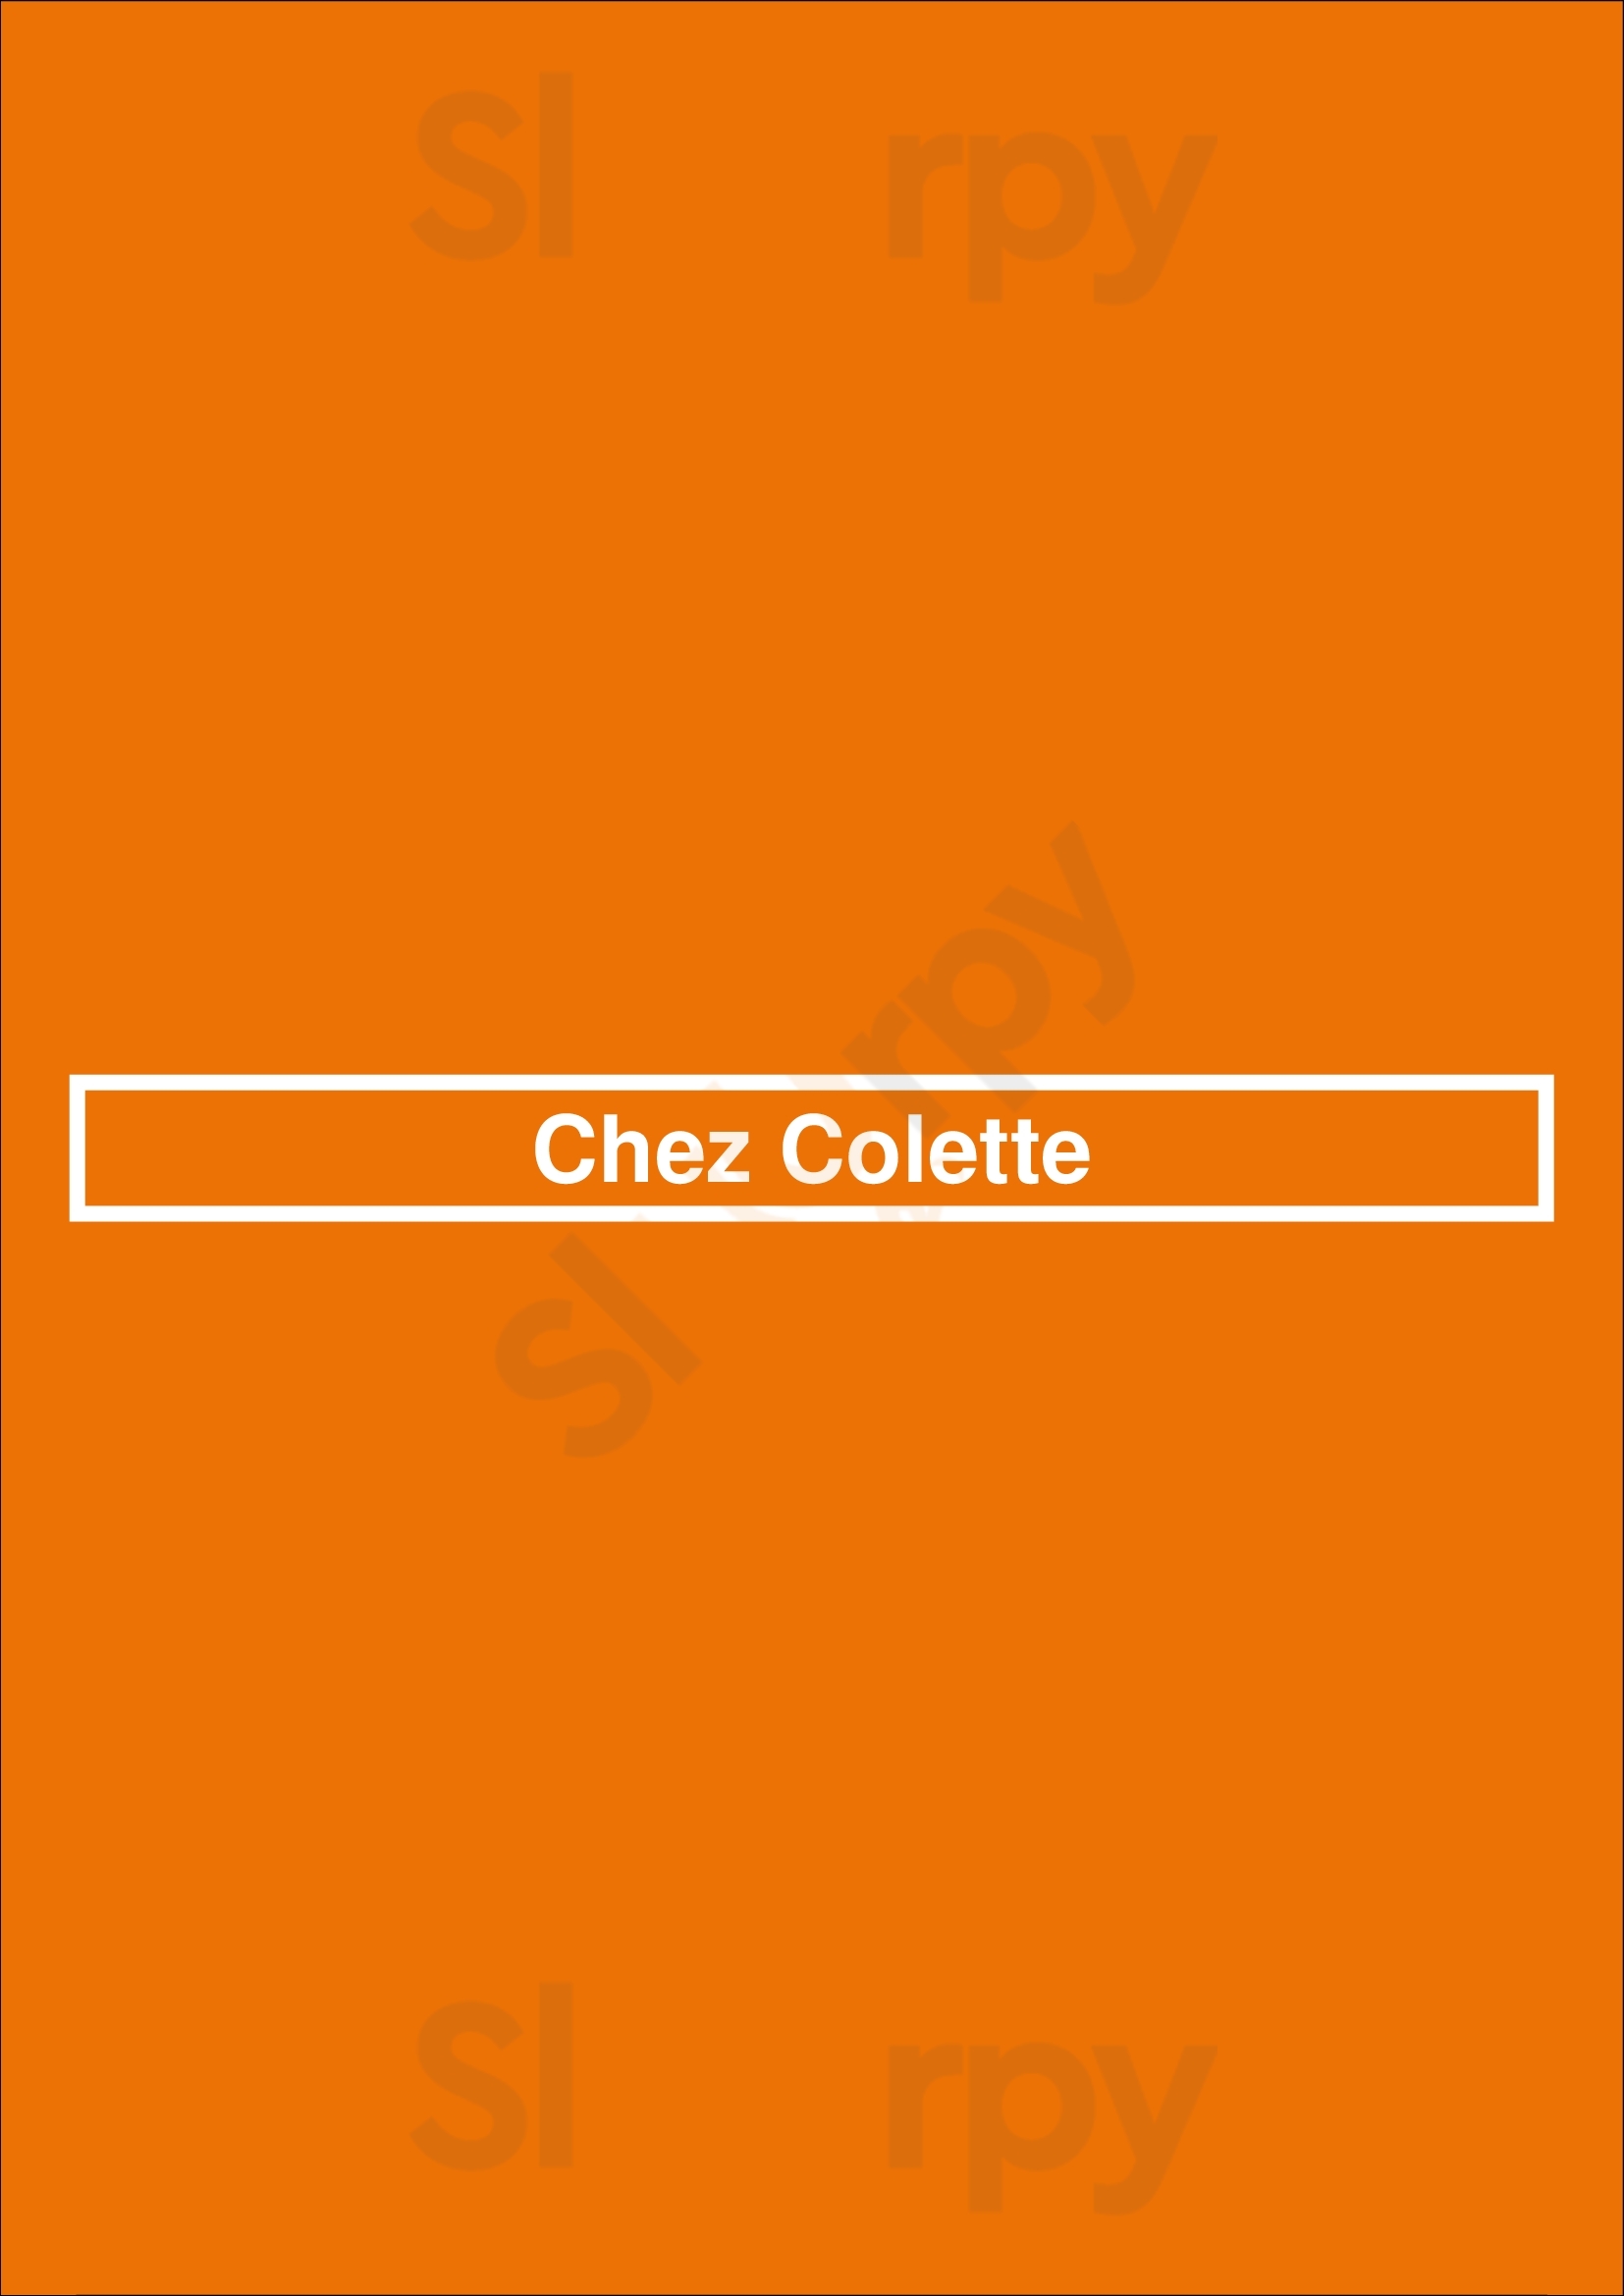 Chez Colette Philadelphia Menu - 1